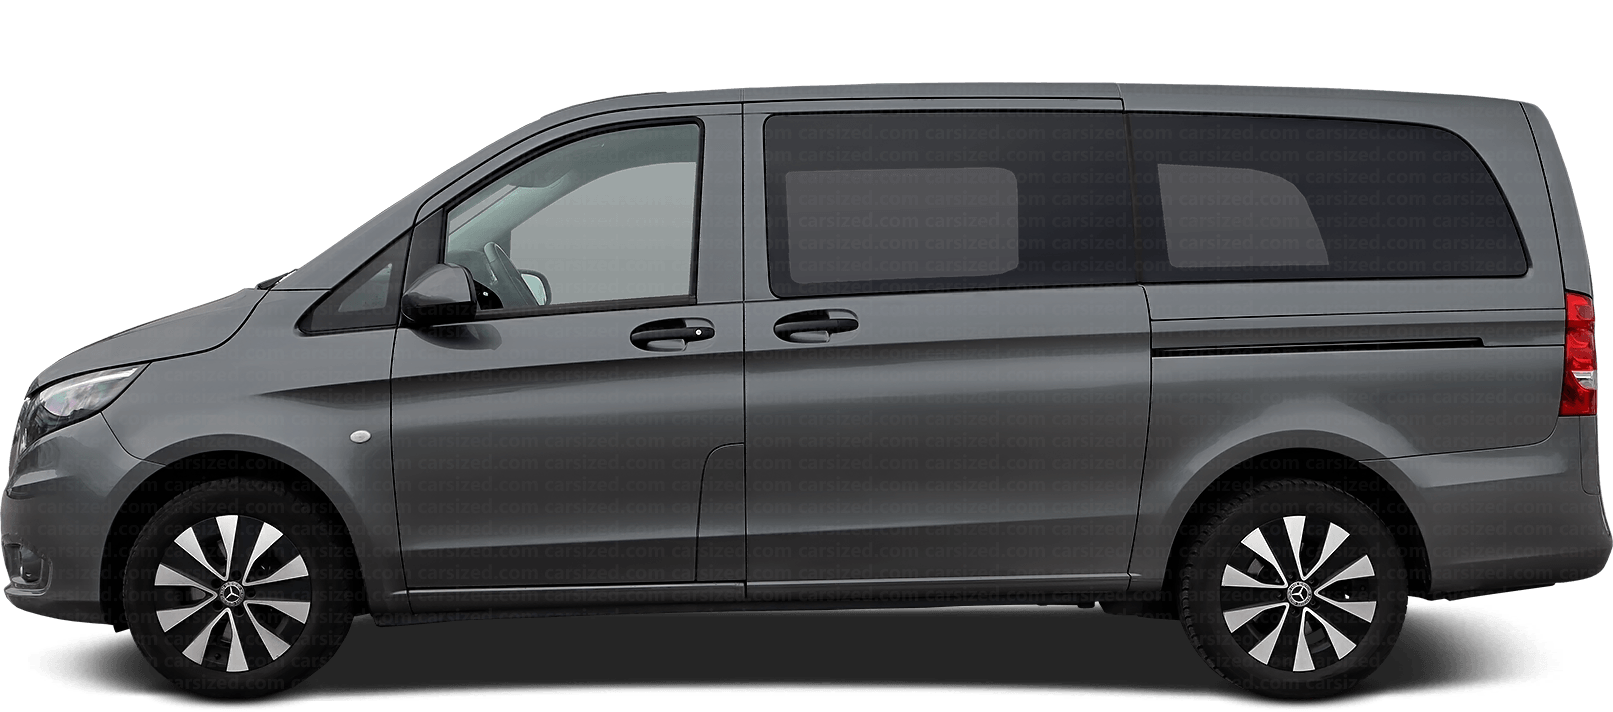 Mercedes-Benz Viano exterior - Side Profile